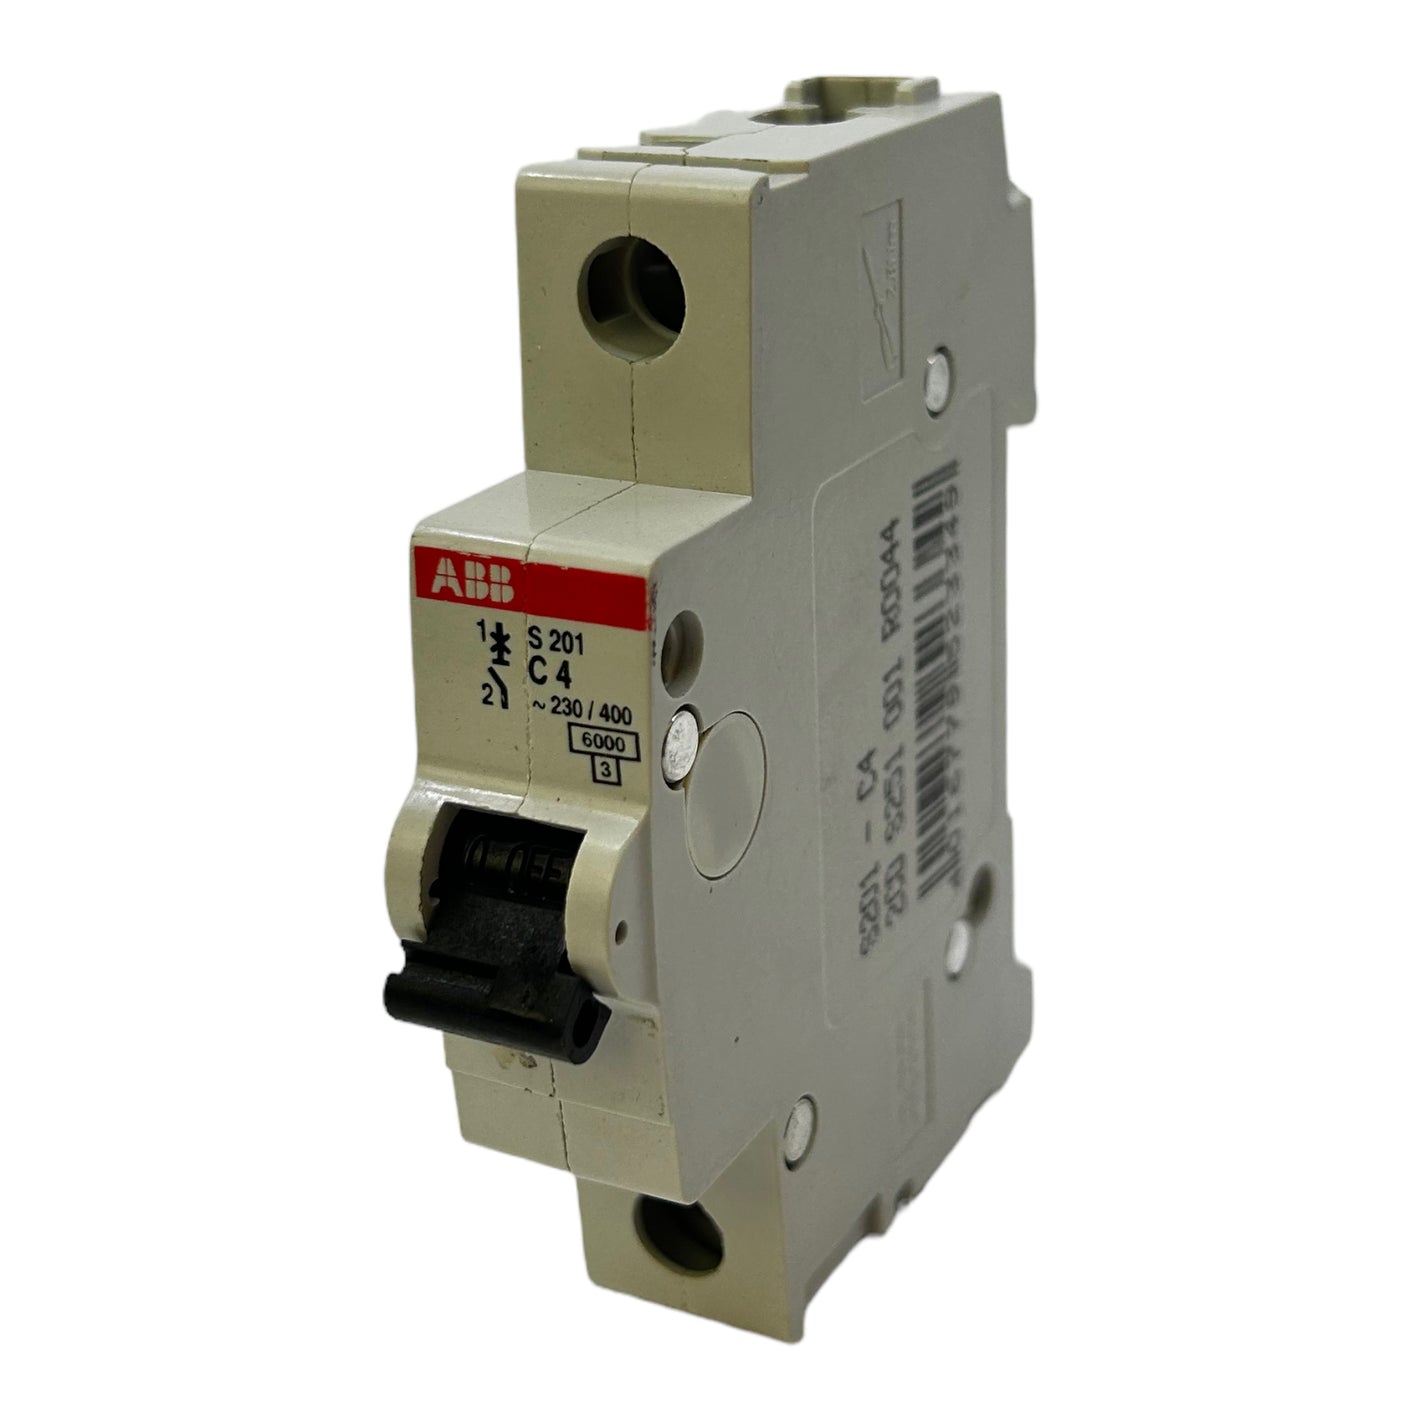 ABB S201-C4 miniature circuit breaker 230V/400V power protection switch 